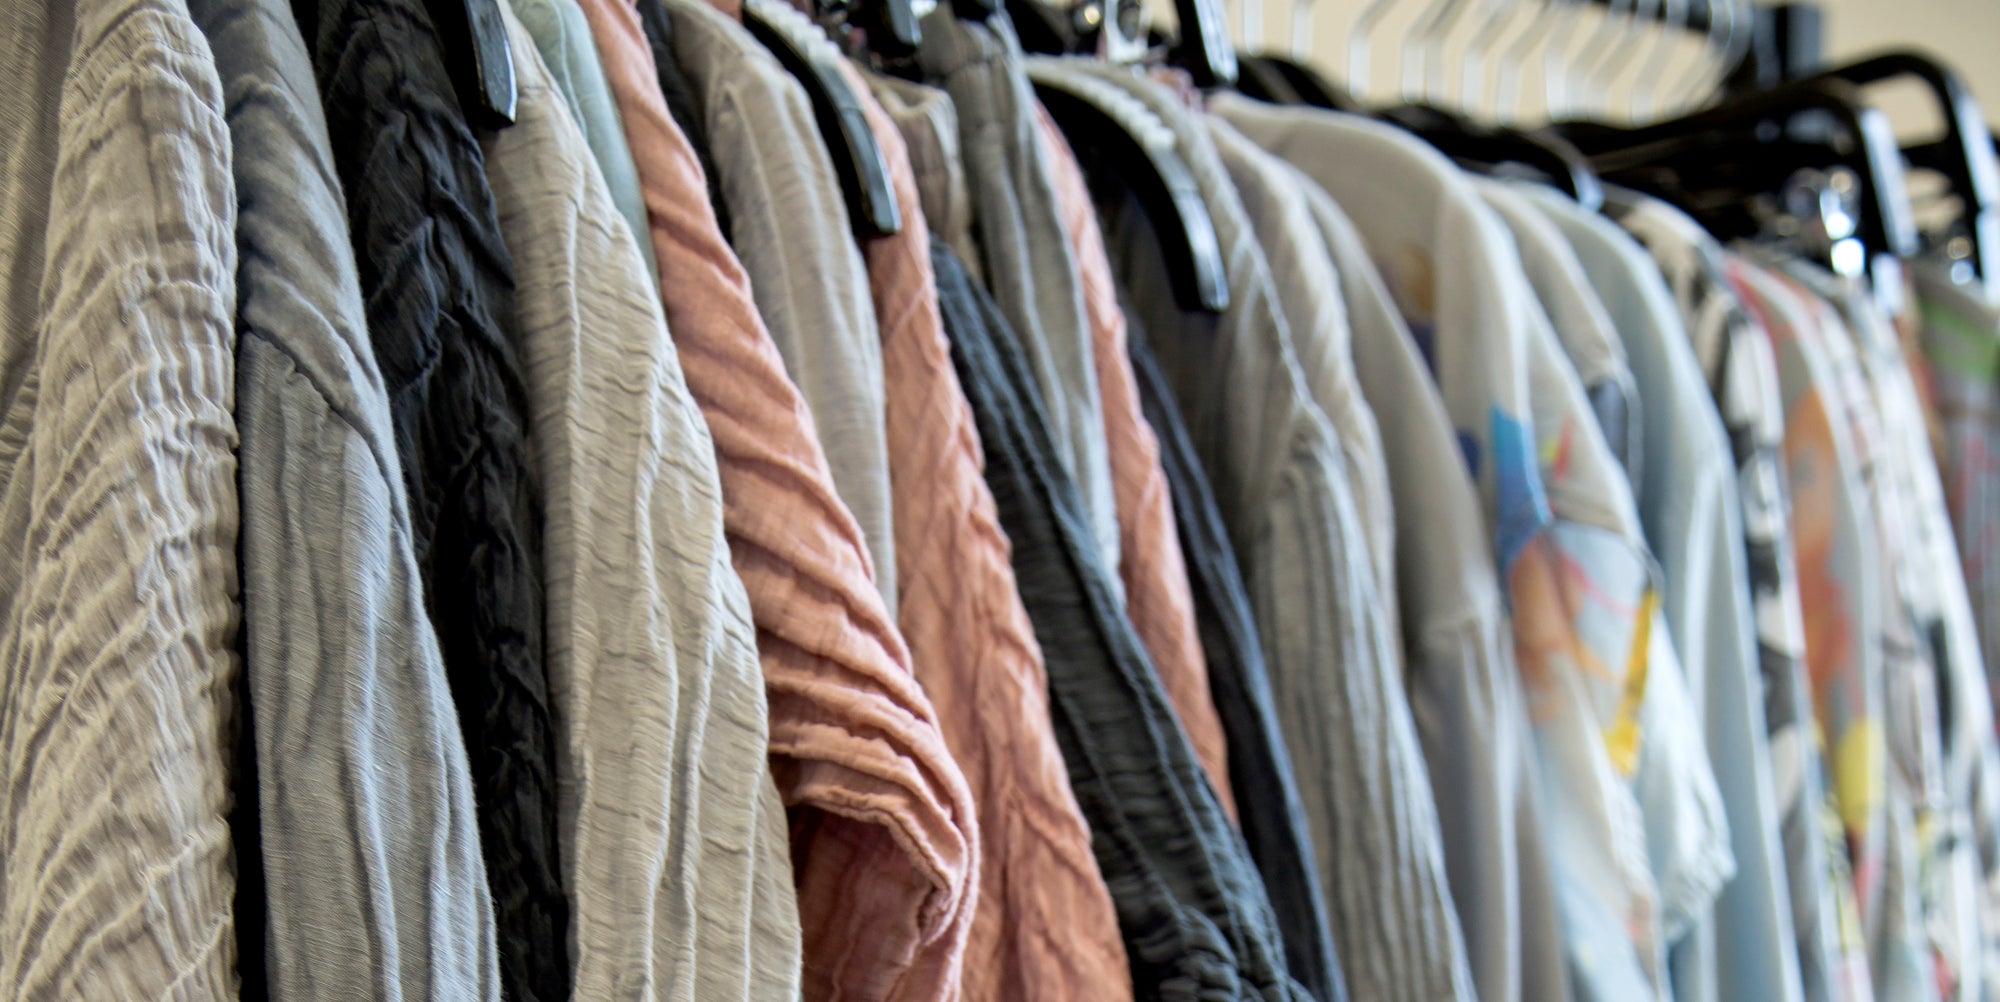 SS'19 collection fabrics: Silk